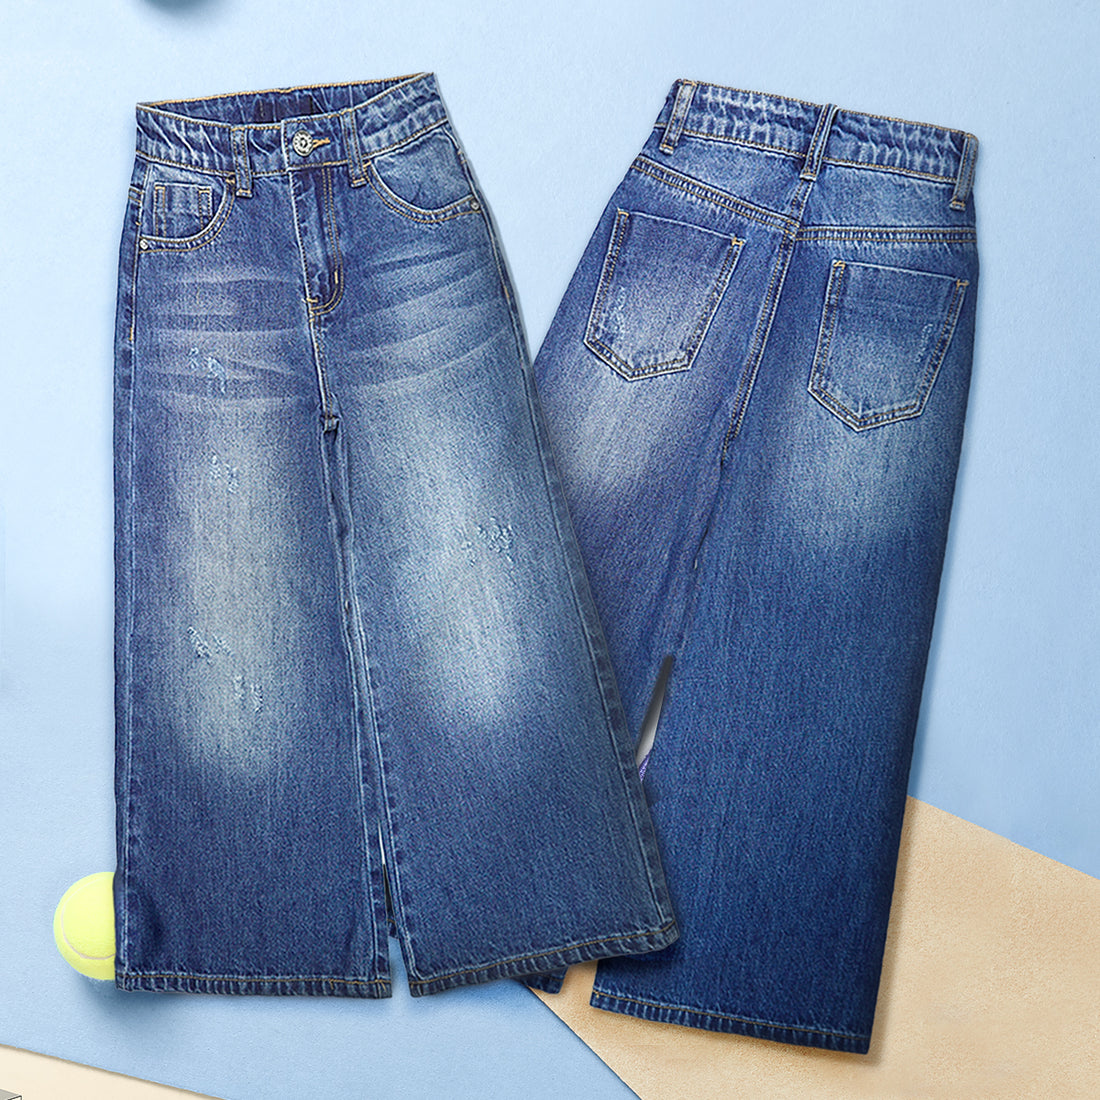 Versatile jeans match versatile kids.